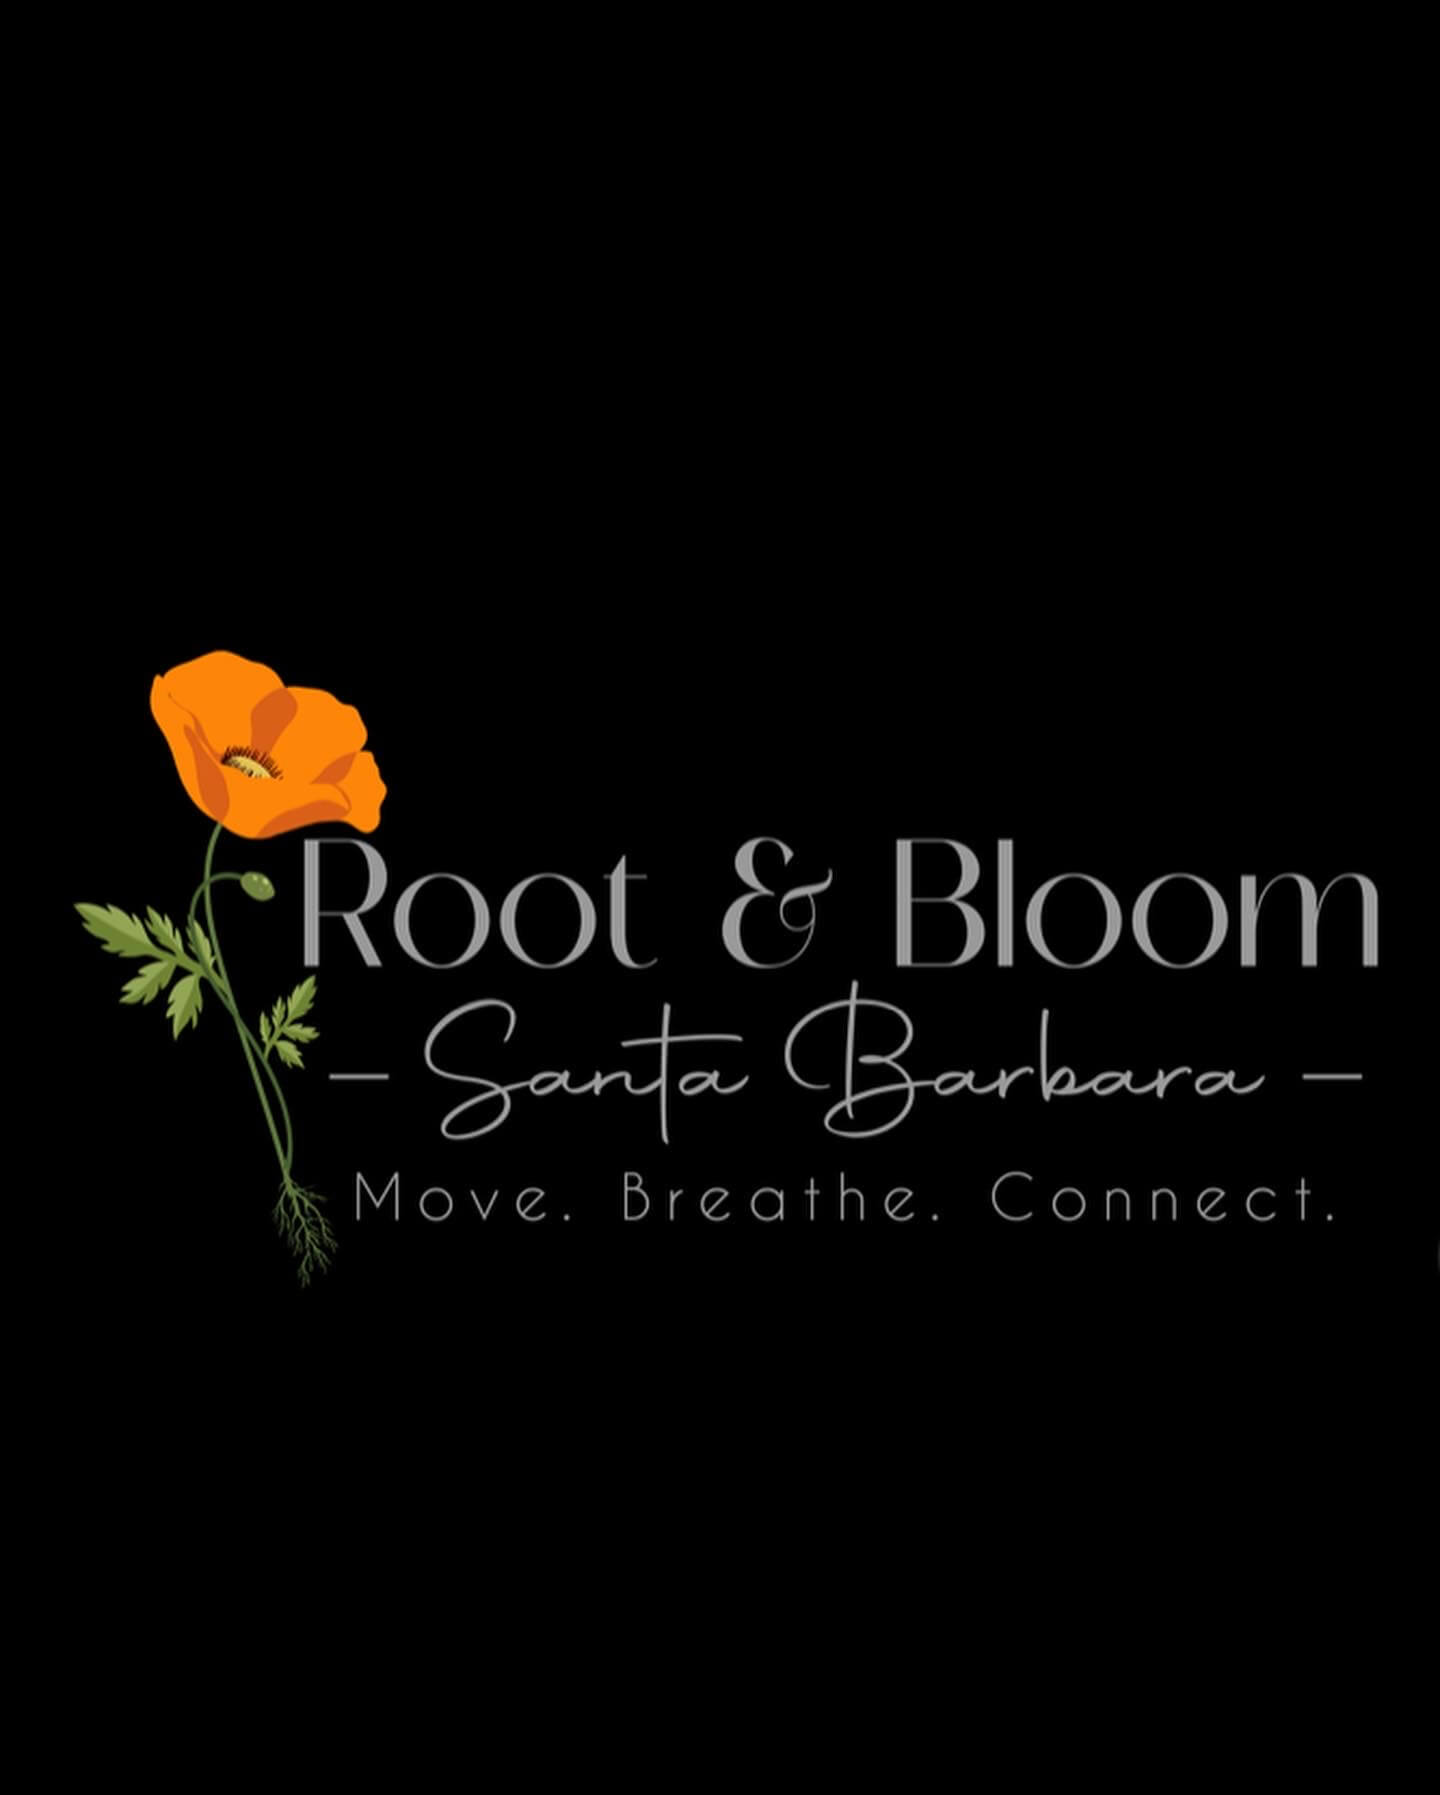 Root & Bloom – Santa Barbara image